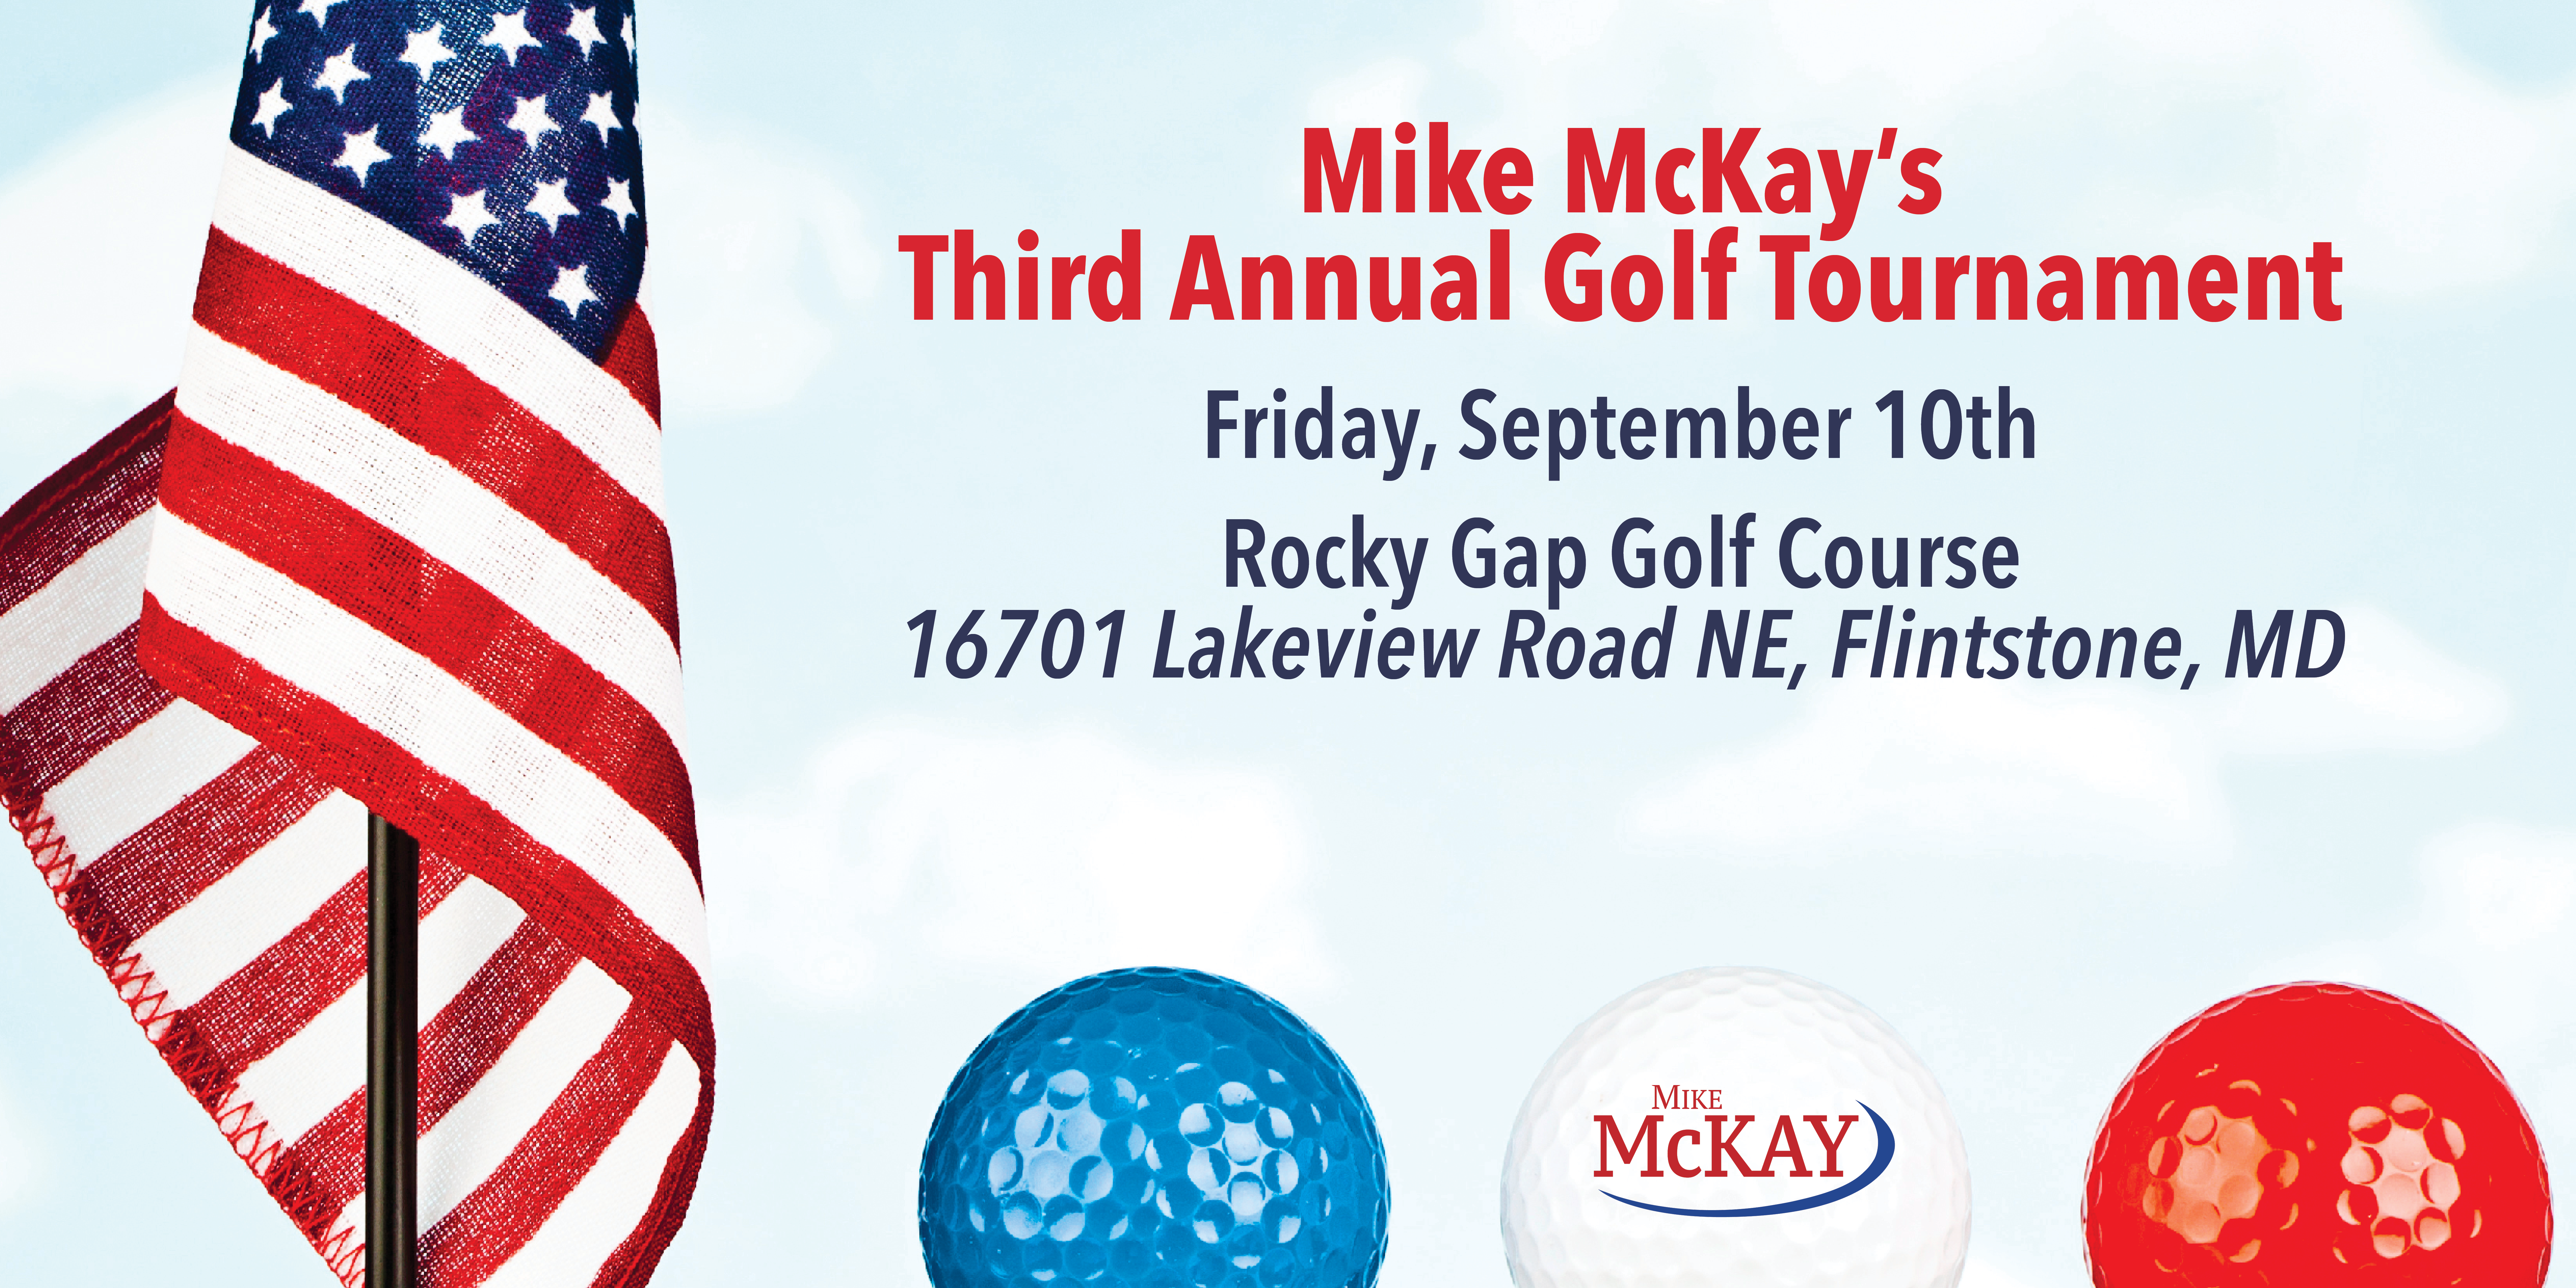 Mike McKay's Third Annual Golf Tournament